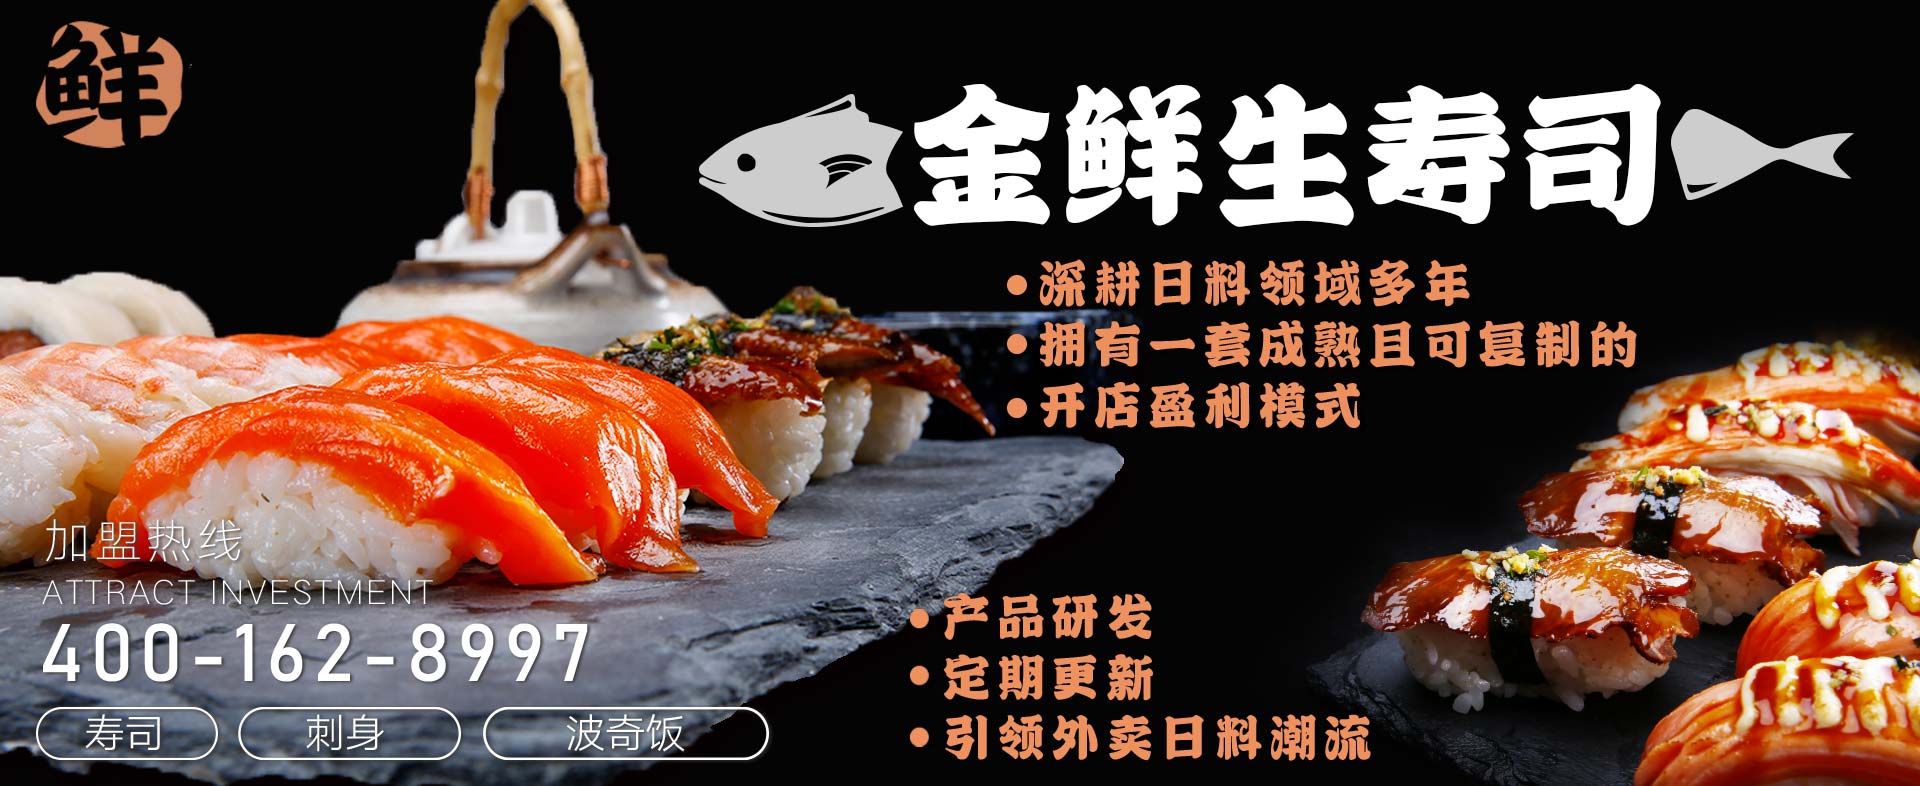 金鲜生寿司banner